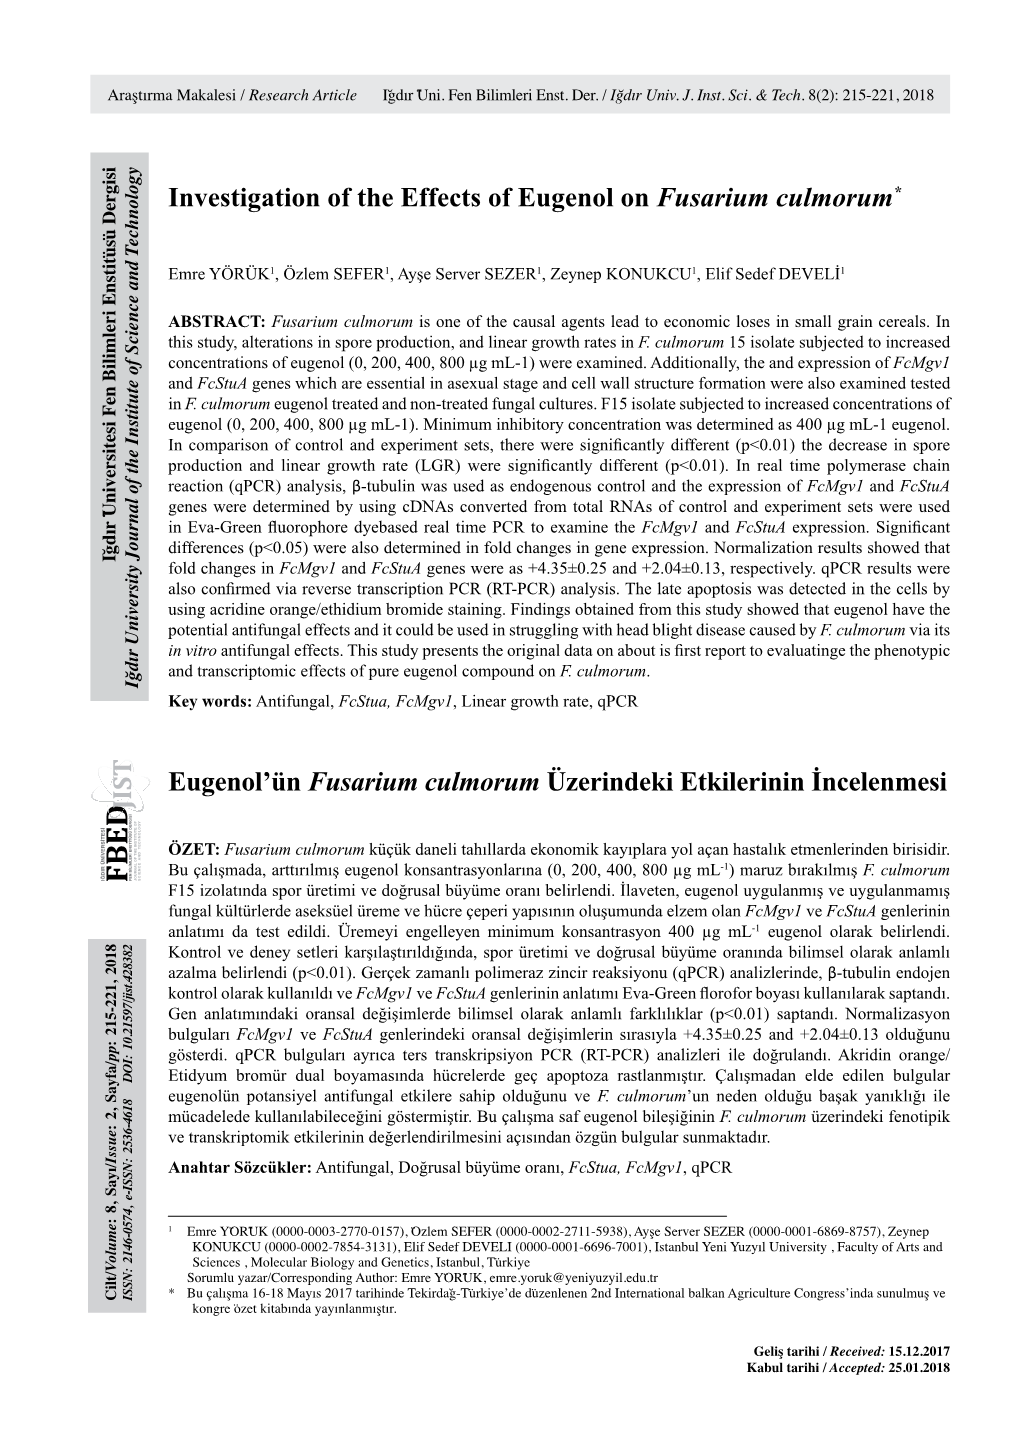 Investigation of the Effects of Eugenol on Fusarium Culmorum* Eugenol'ün